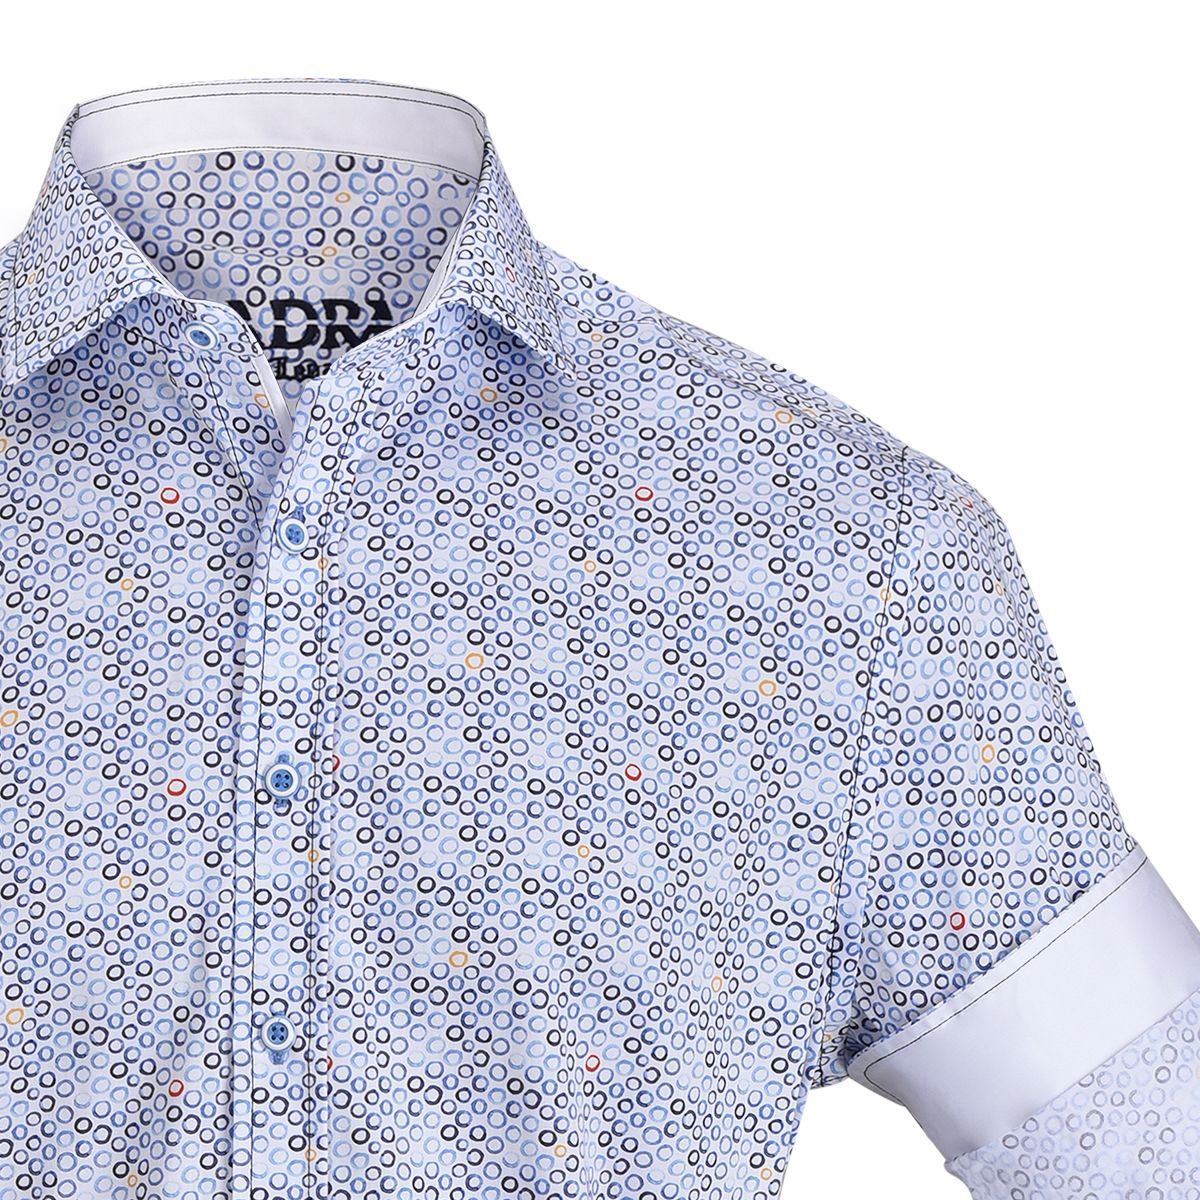 CM0W465 - Cuadra ocean casual fashion circle abstract shirt for men-Kuet.us